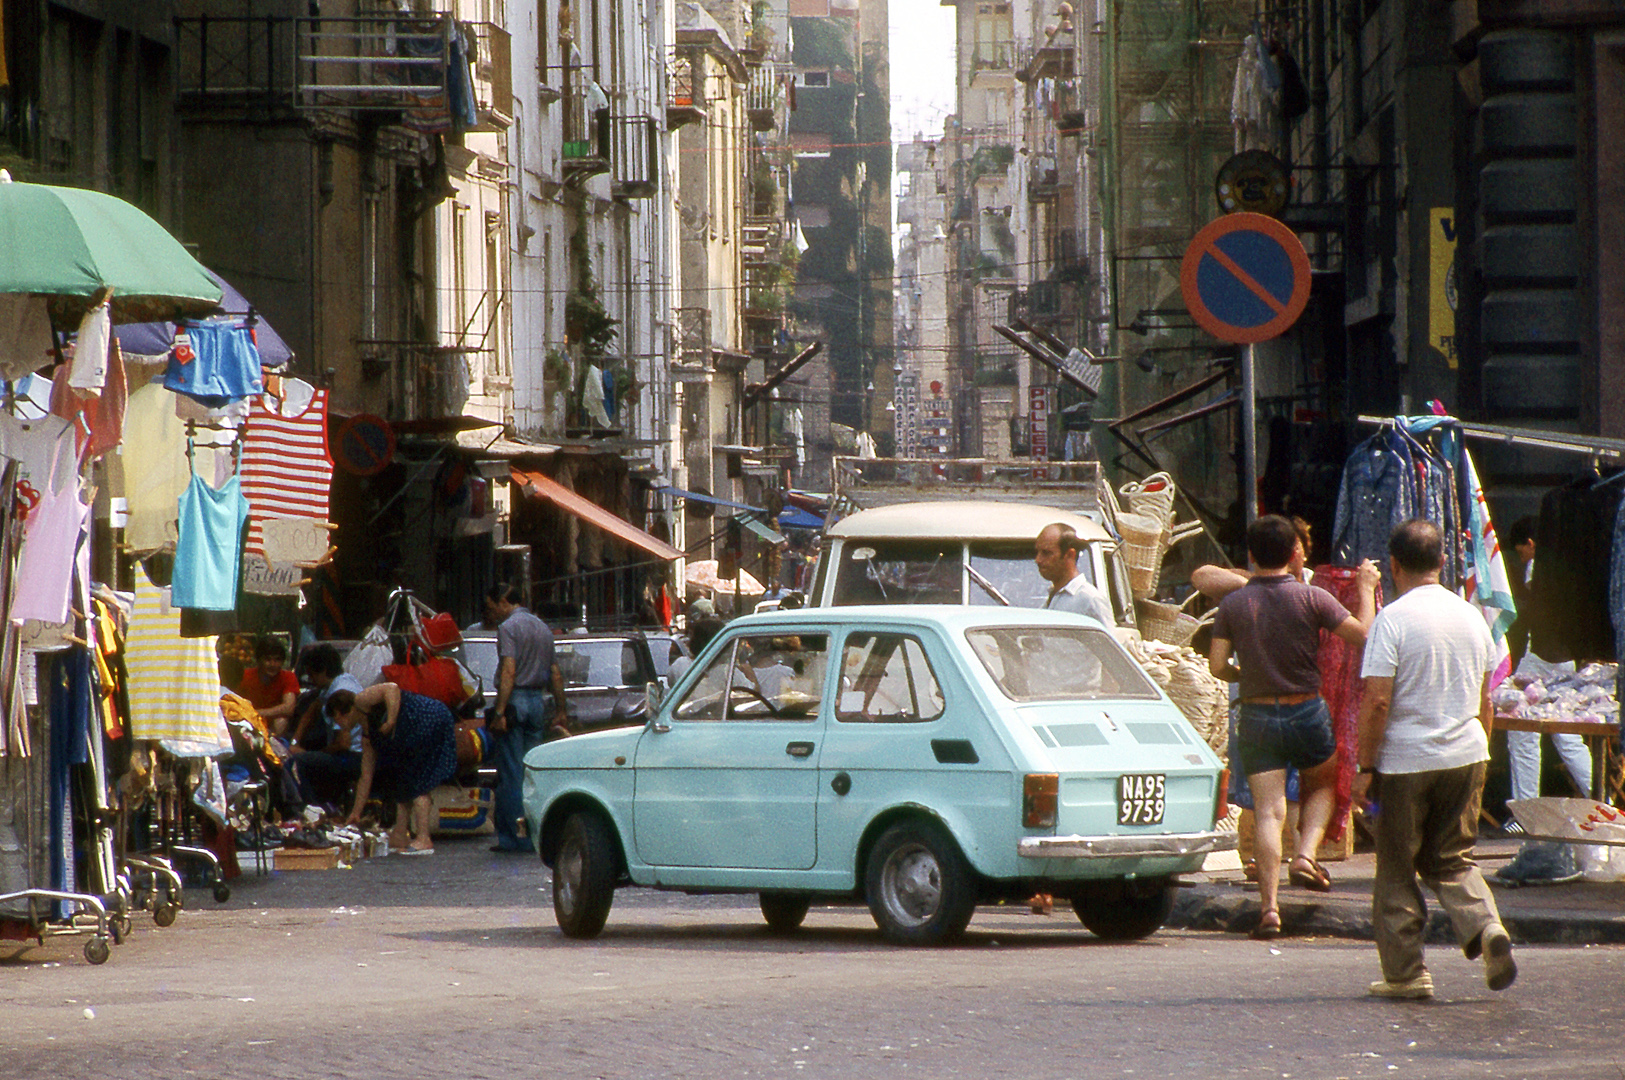 Straatbeeld, Napels (Campanië, Italië); Street view, Naples (Campania, Italy)